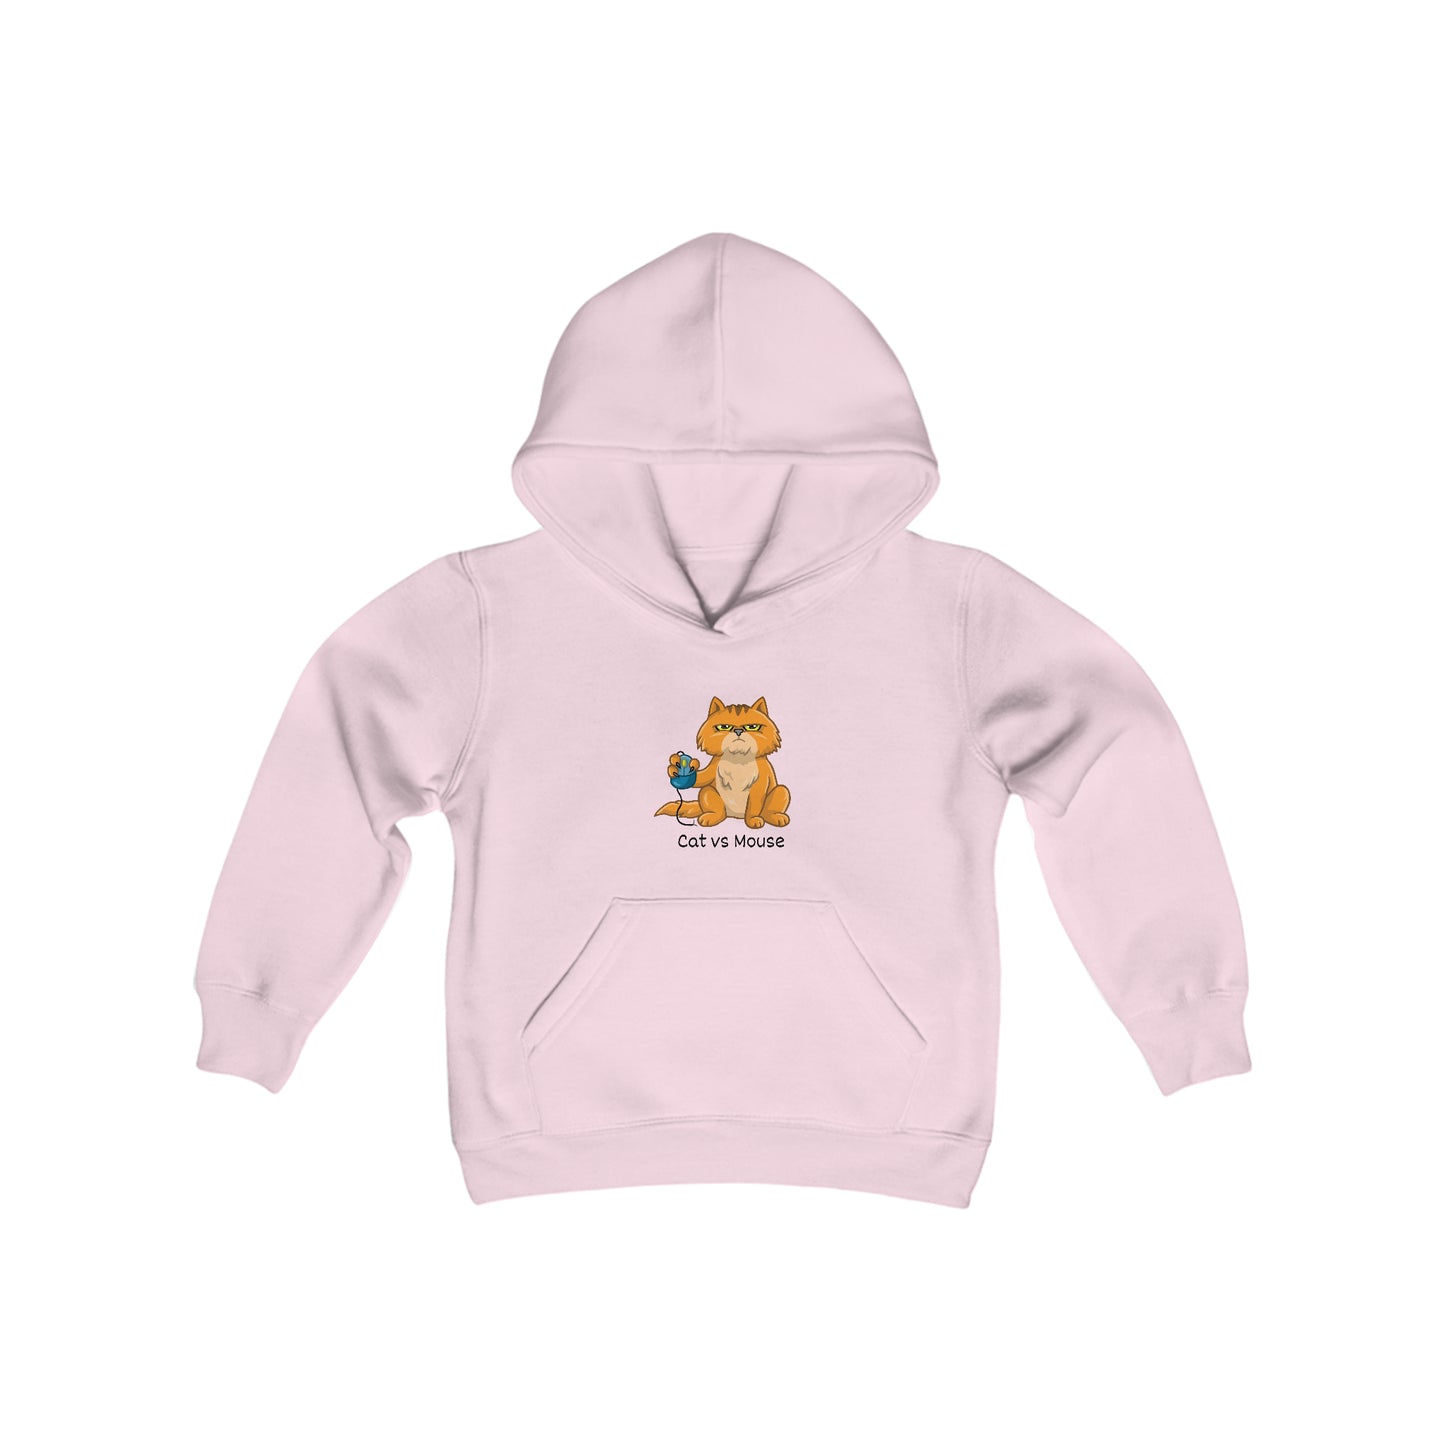 'Cat vs Mouse' Youth Heavy Hooded Sweatshirt